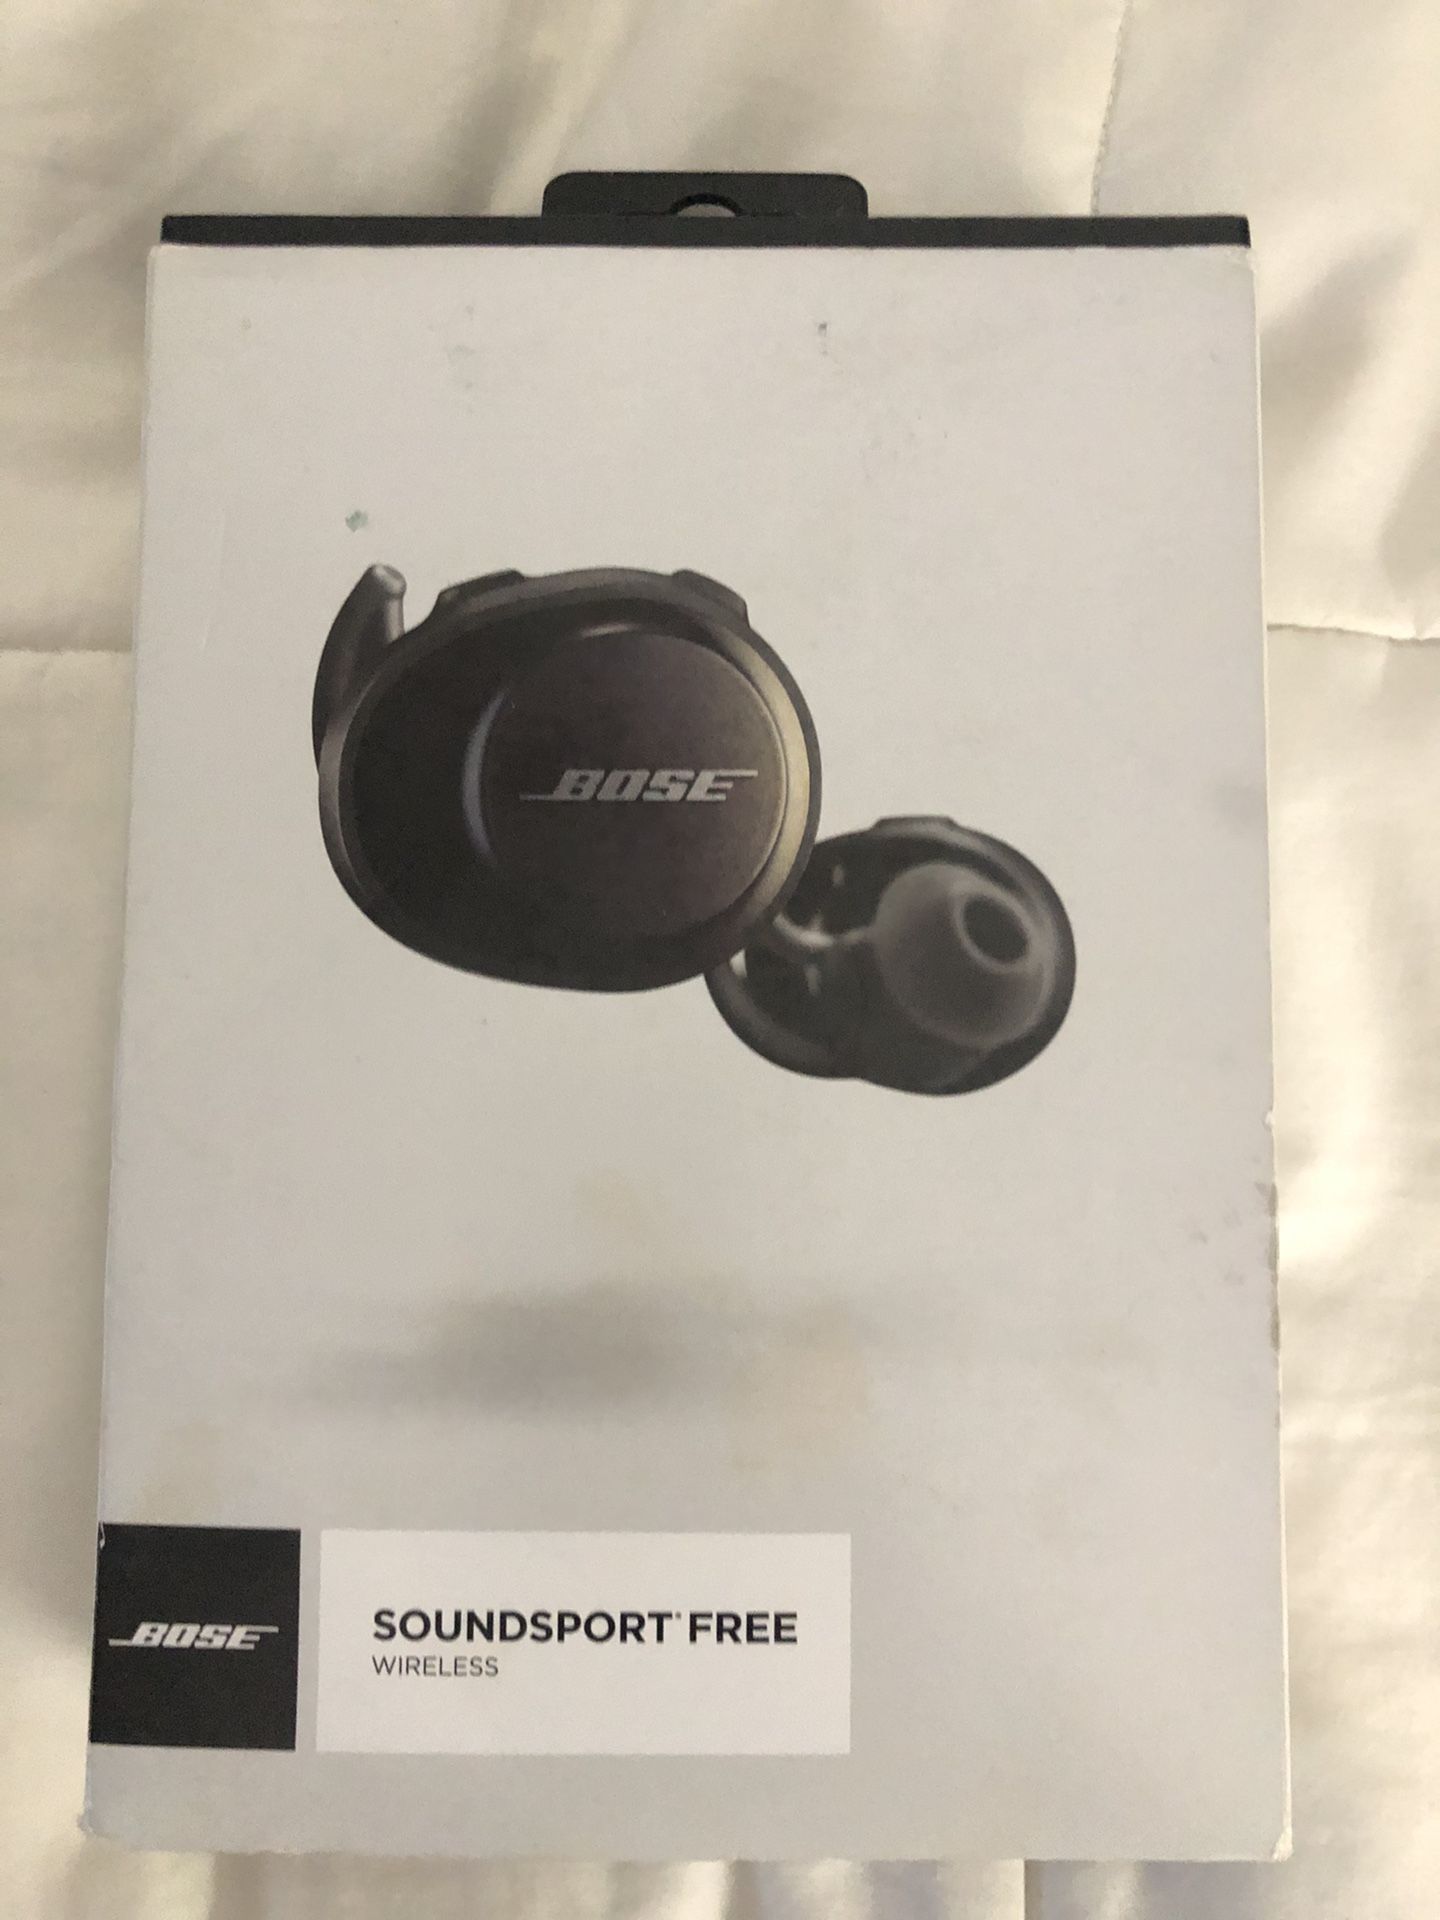 Bose Soundsport Free wireless earbuds